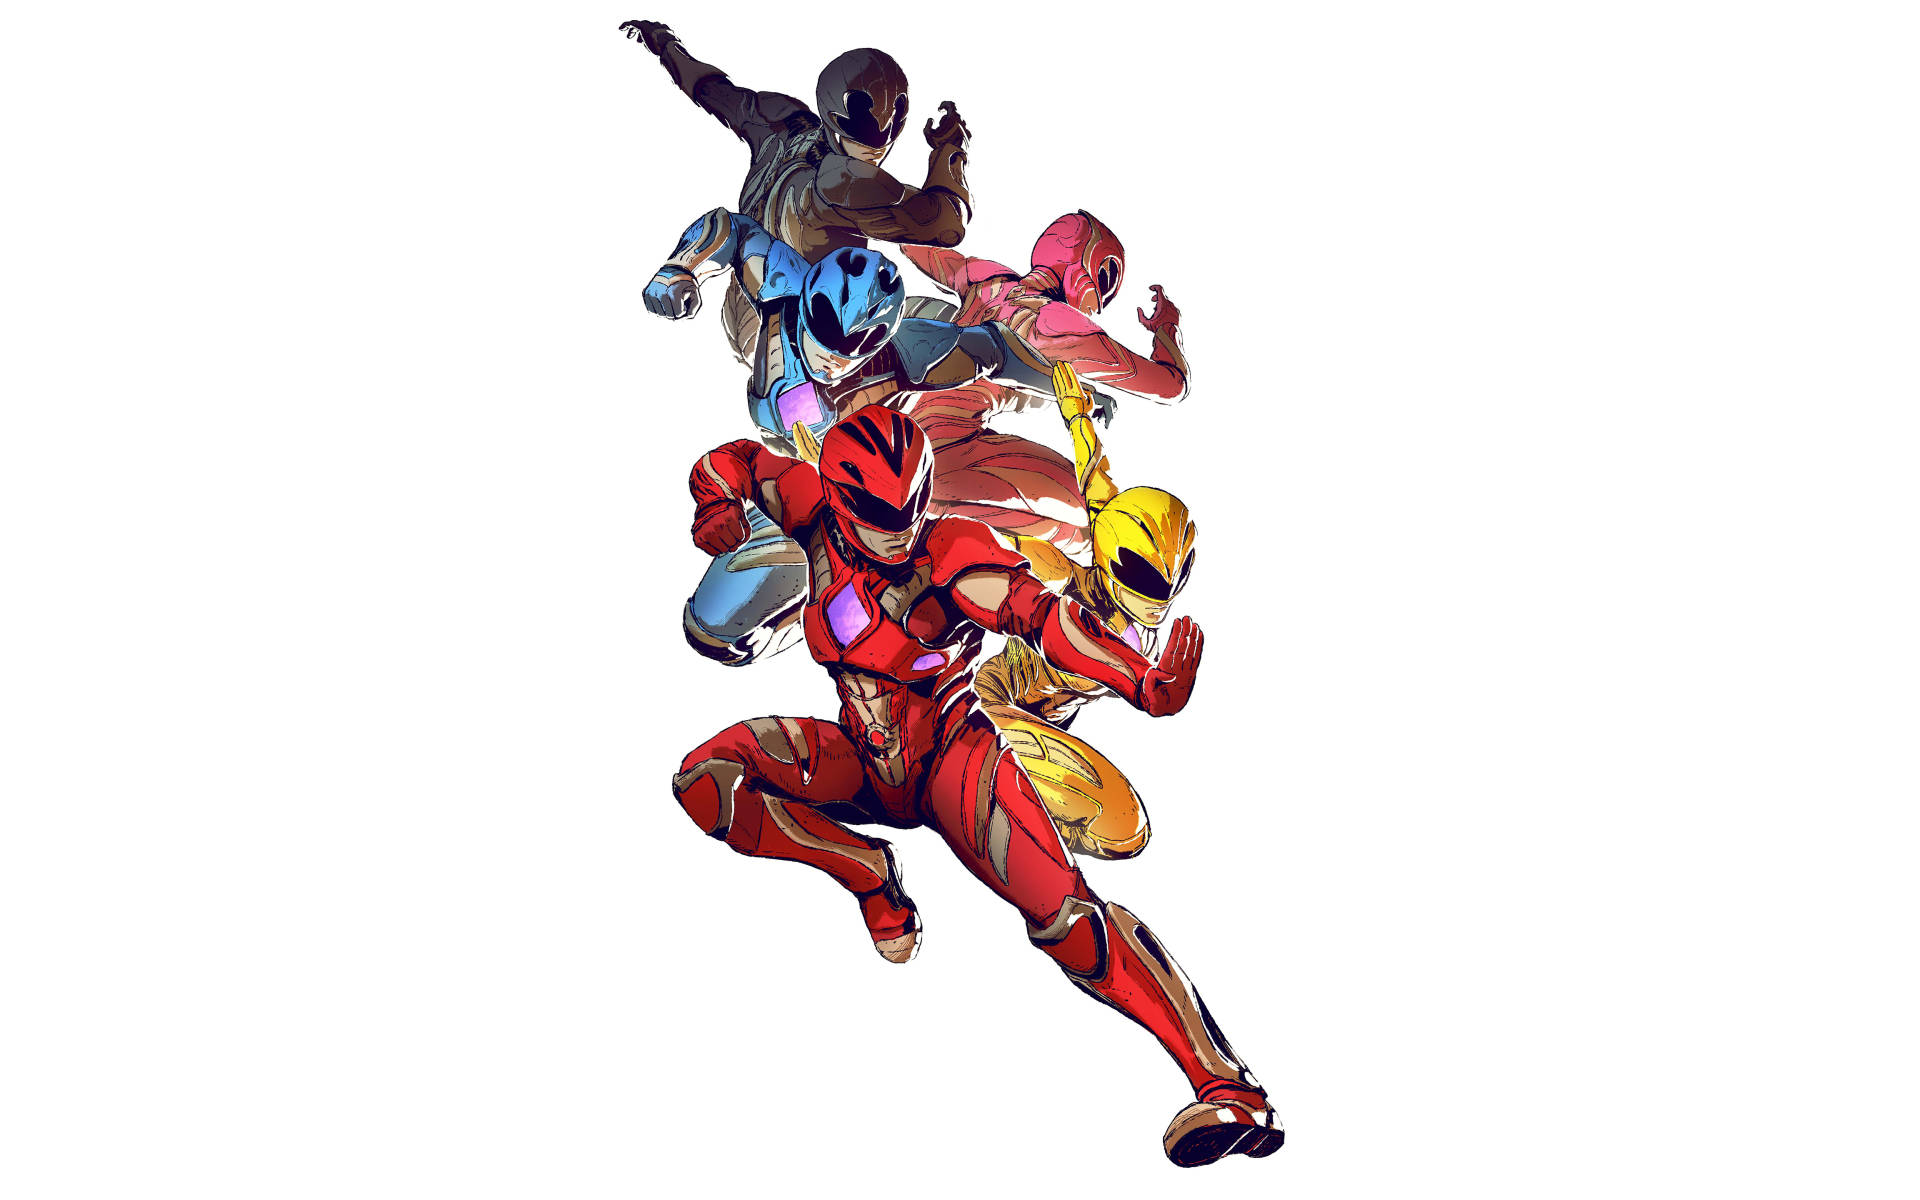 Power Rangers 2017 Art Background